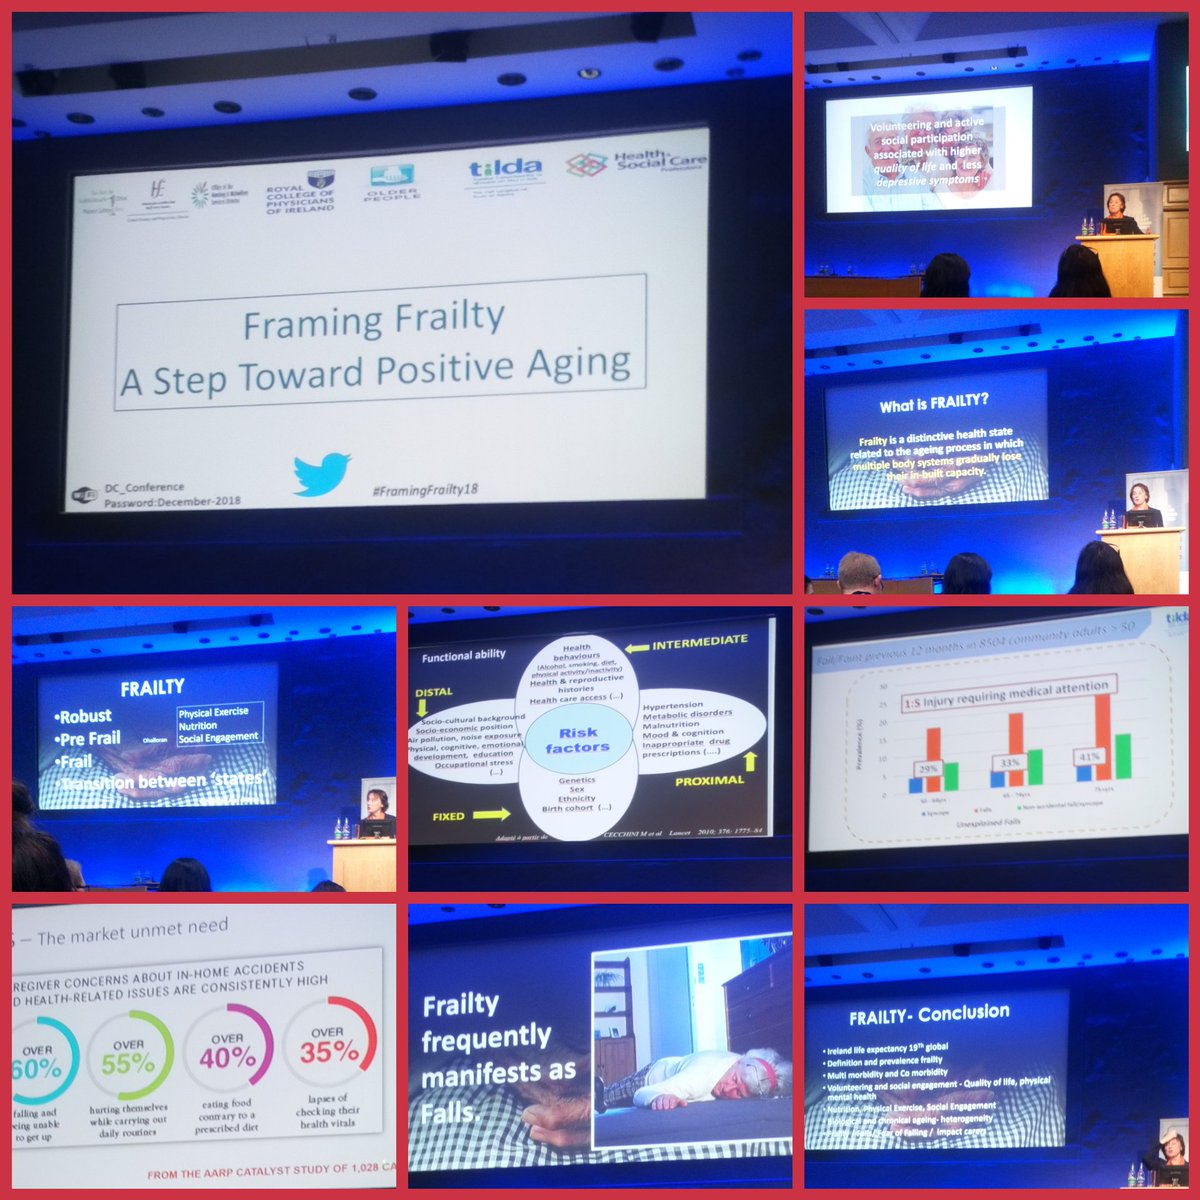 Professor Rose Anne Kenny delivers powerful first presentation on Frailty & The Longitudinal Study on Aging. #framingfrailty18 #AStepTowardsPositiveAging #Stepsintherightdirection @ICPOPIreland @tilda_tcd @RCPI_news @CSPD_HSE